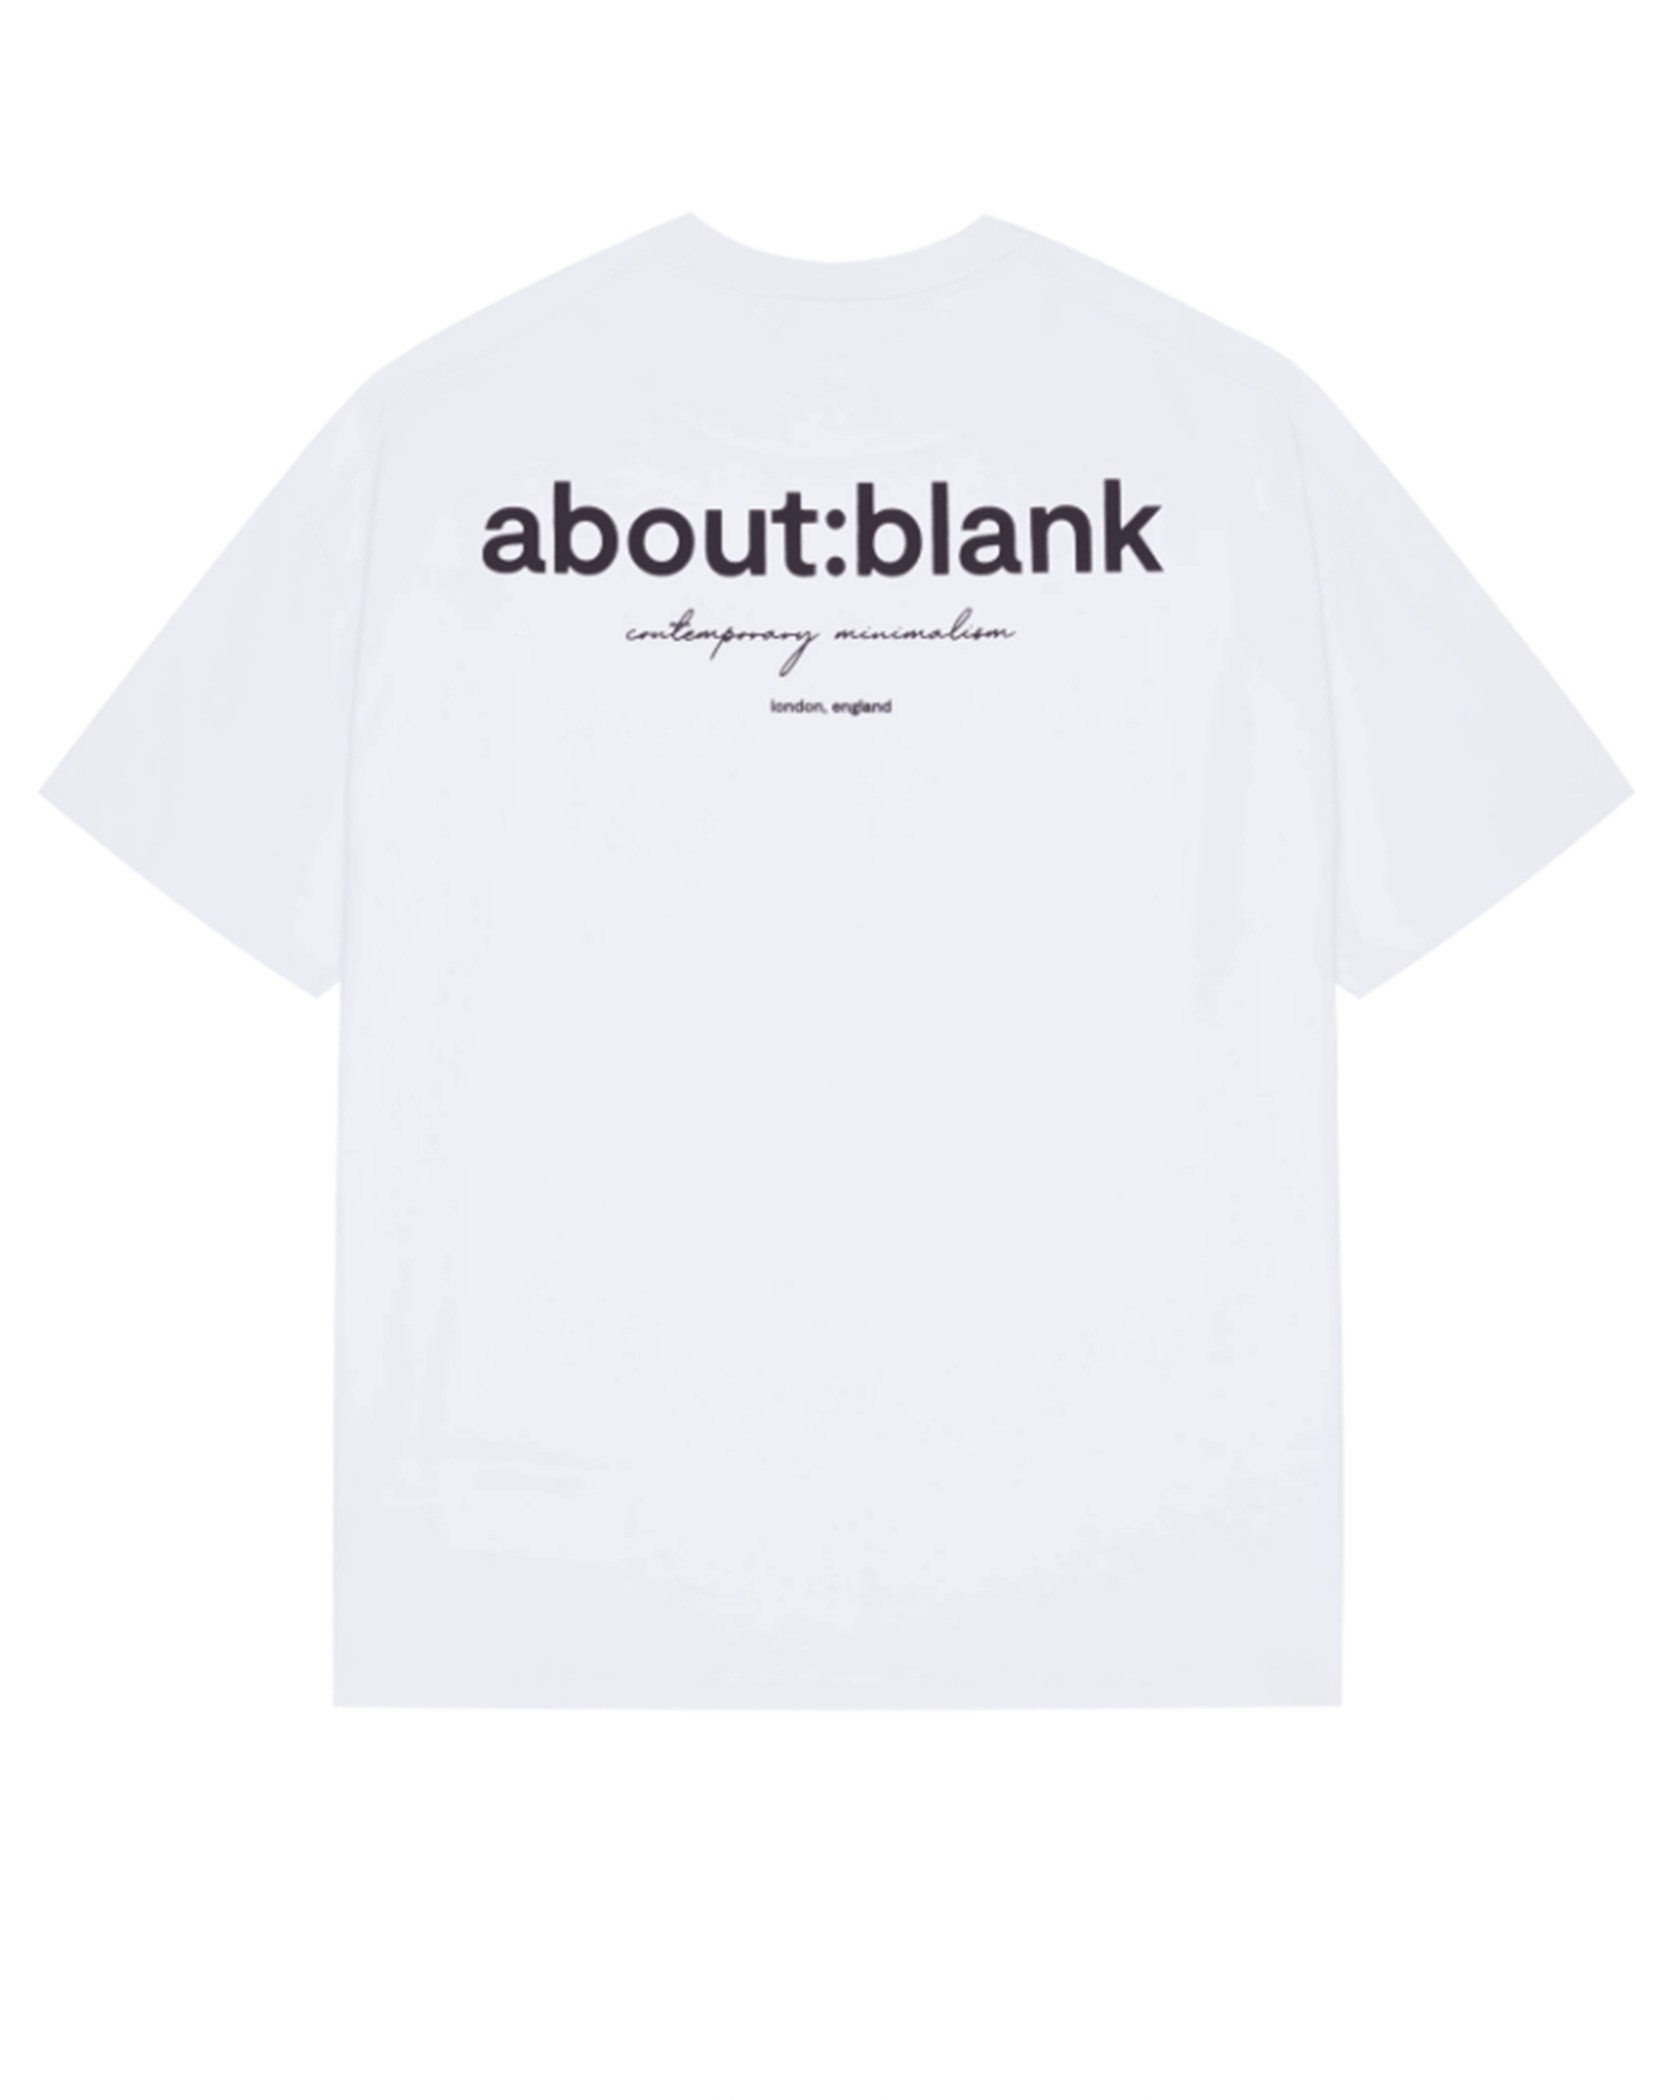 About blank - box t-shirt white/black